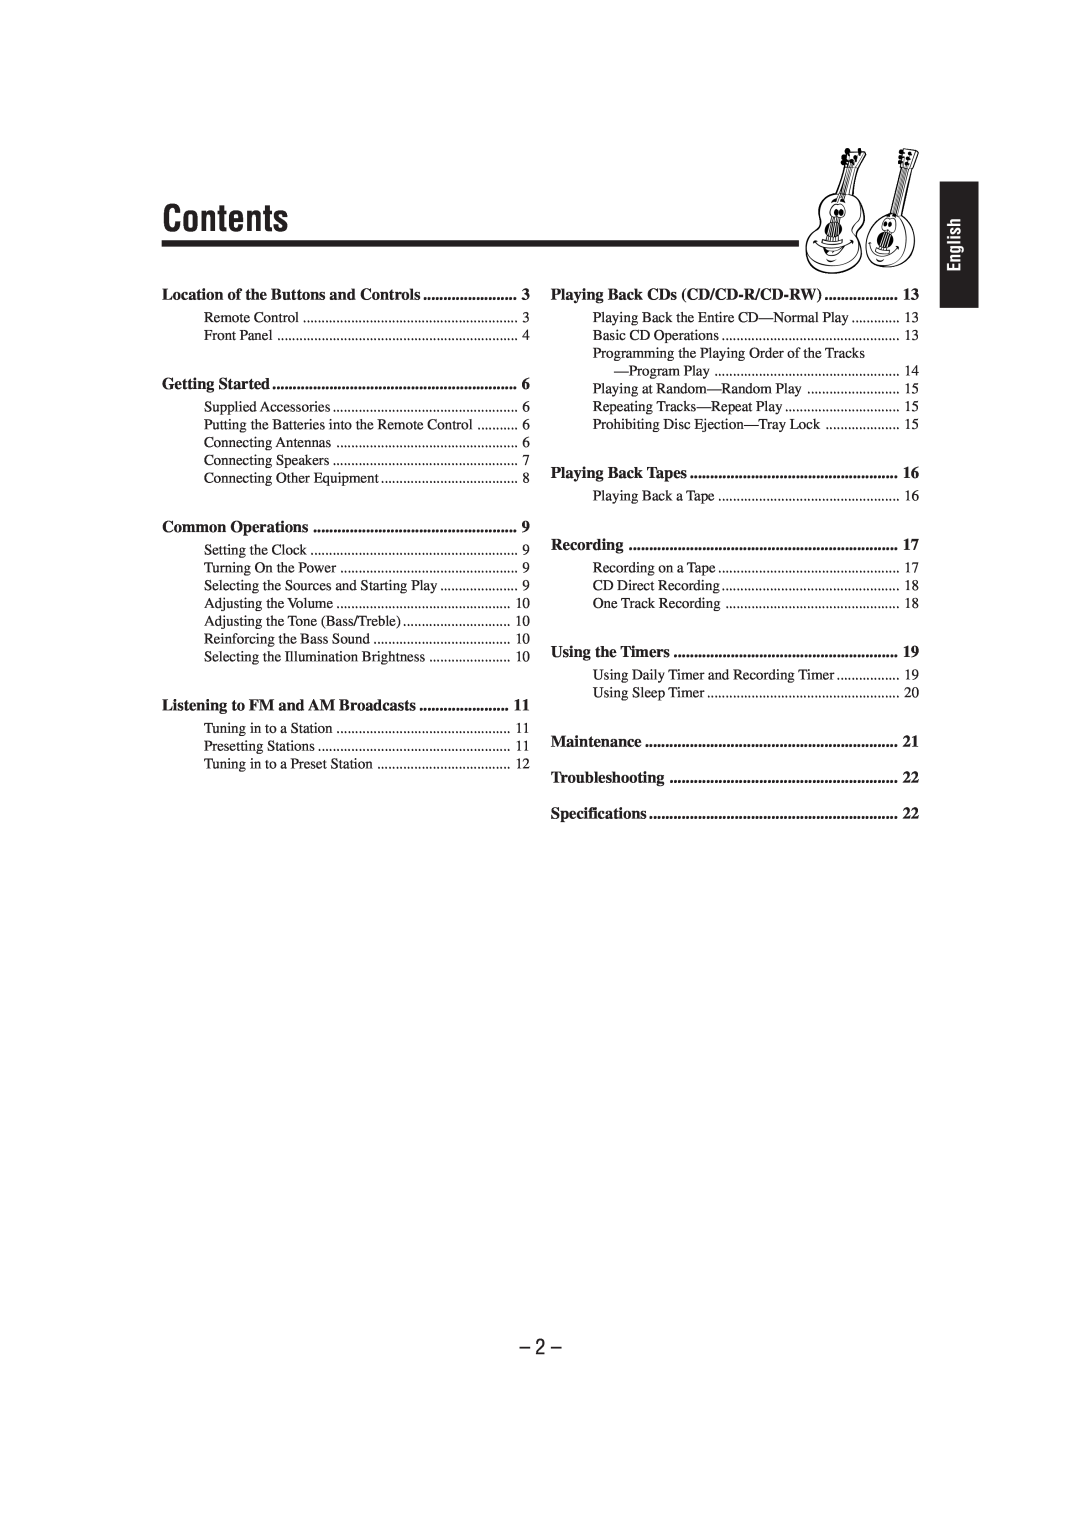 JVC FS-L30 manual Contents, English 